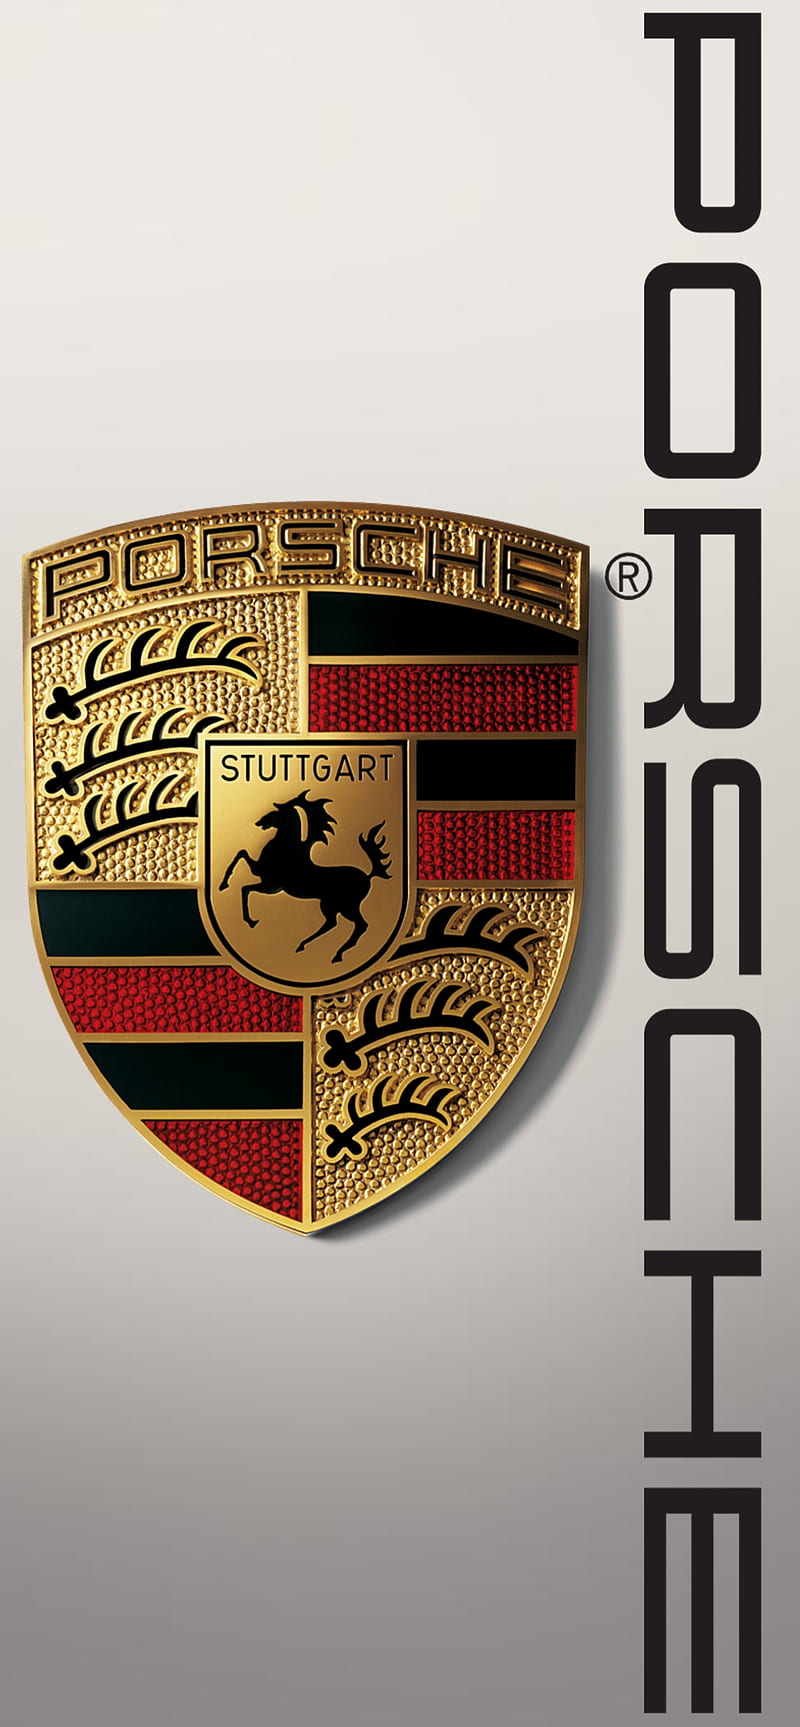 Porsche Logo Pictures | Download Free Images on Unsplash